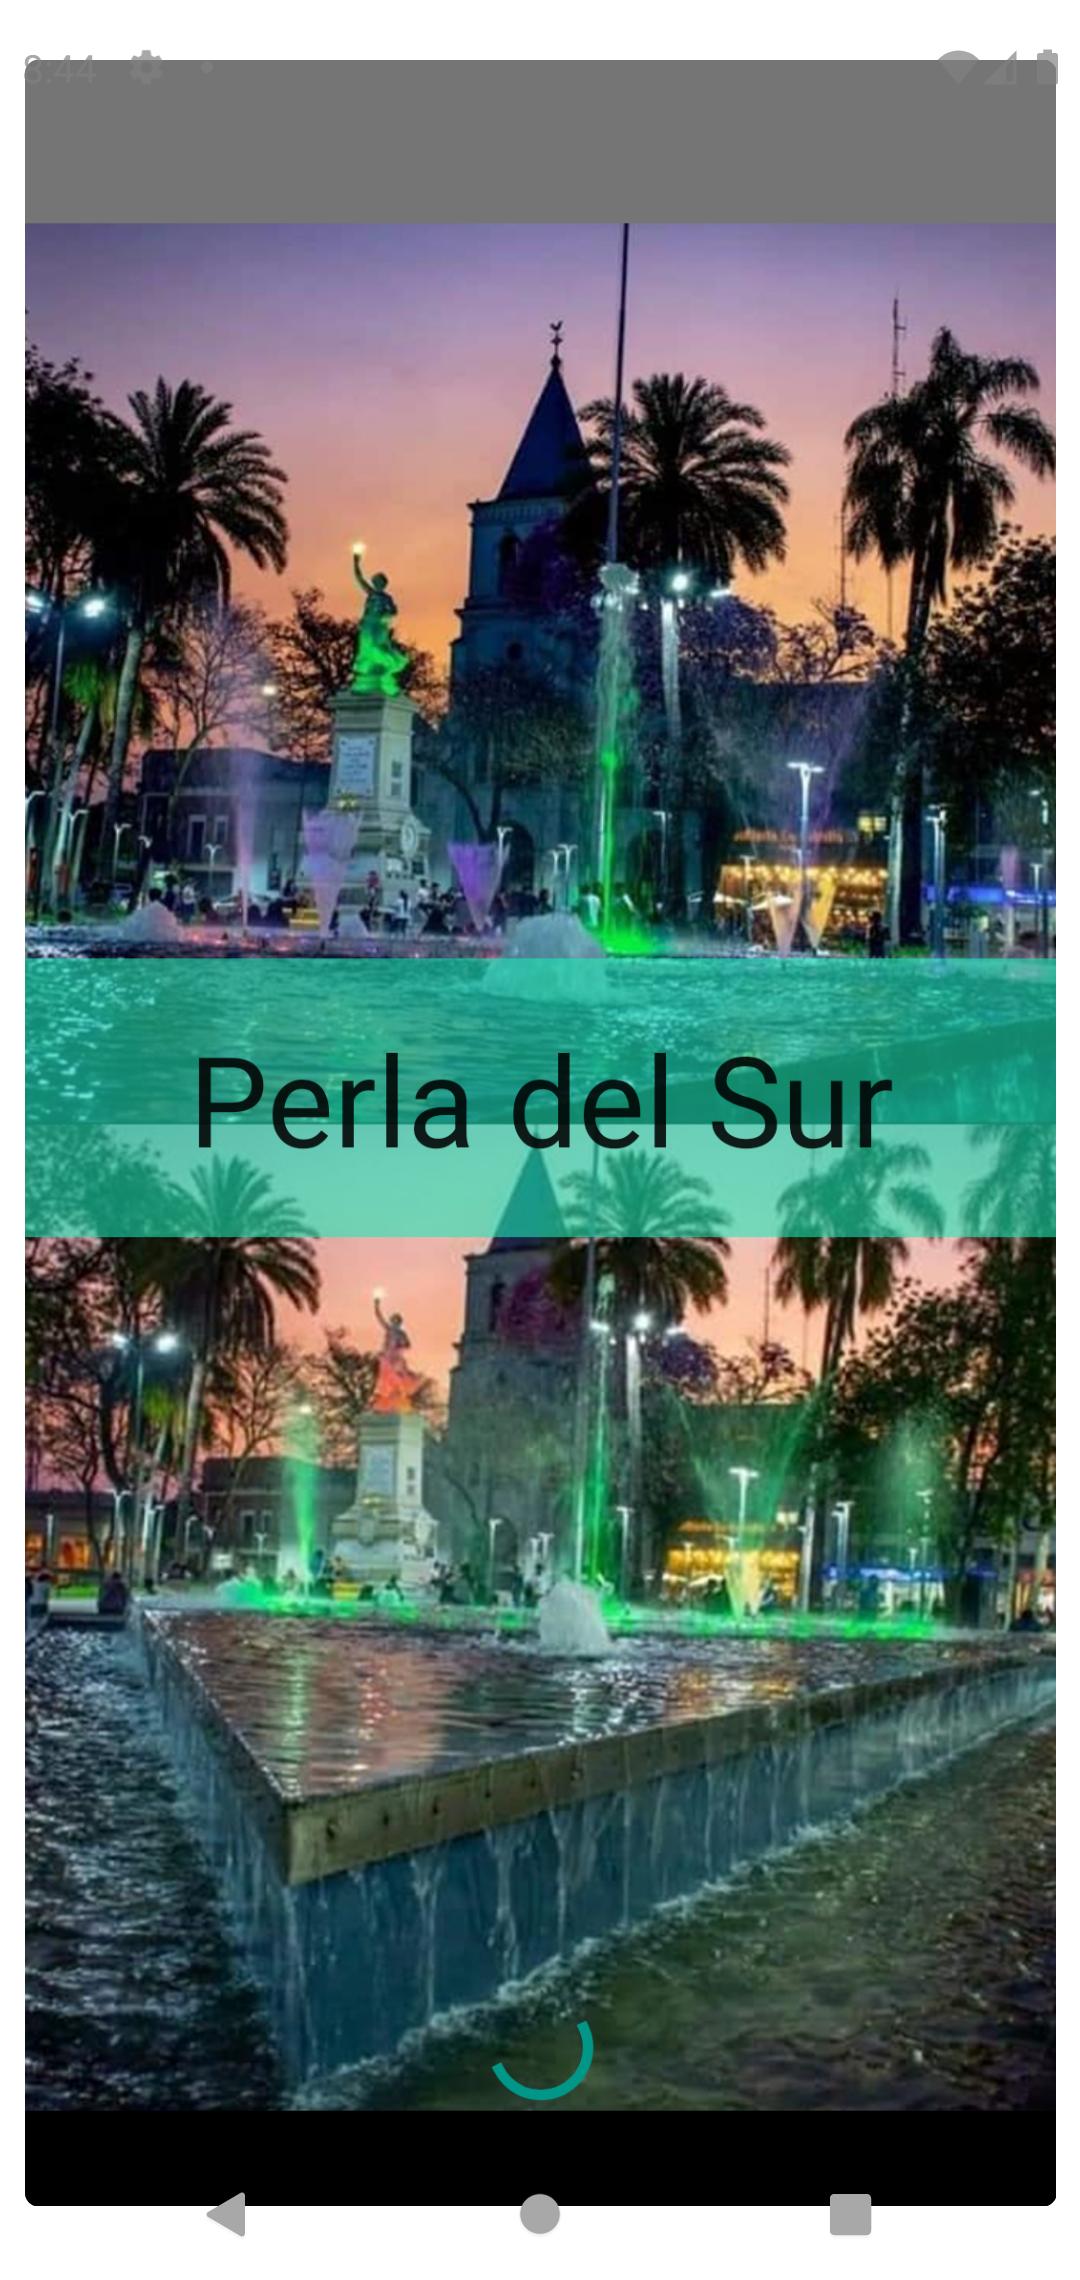 Perla del Sur for Android - APK Download